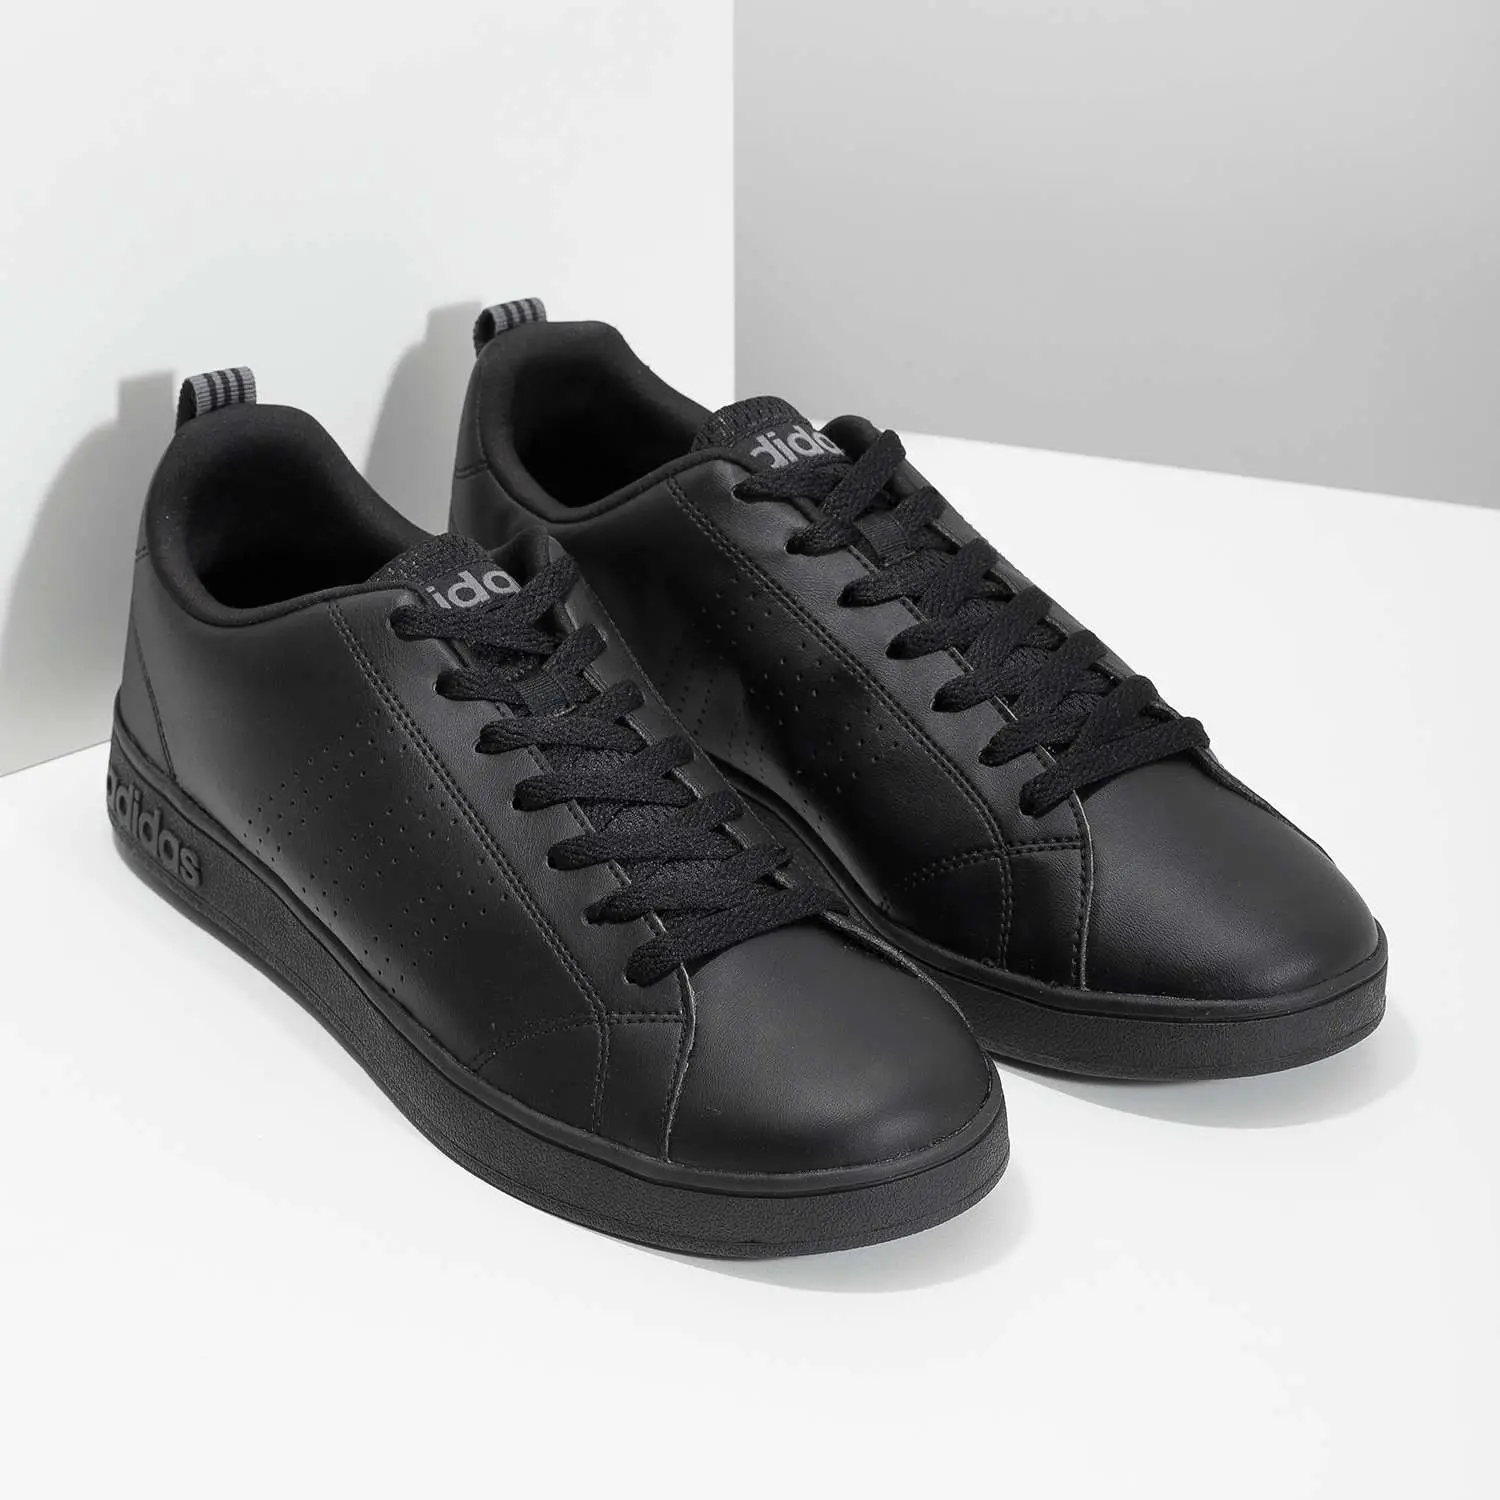 Adidas Menâs black sneakers